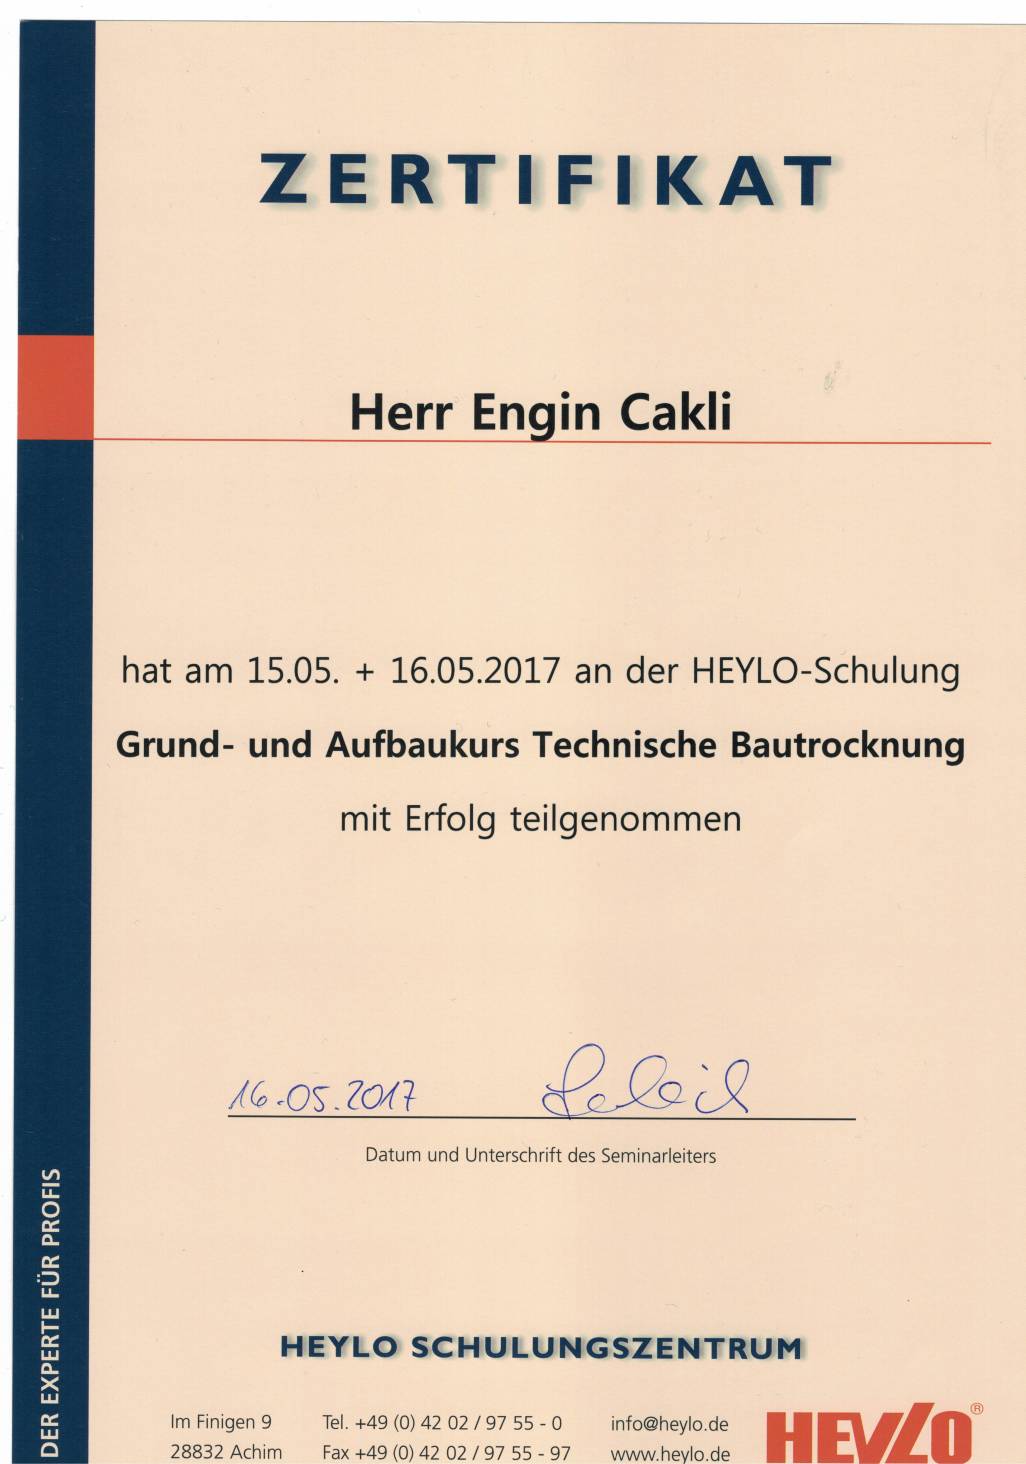 Zertifikat Technische Bautrocknung